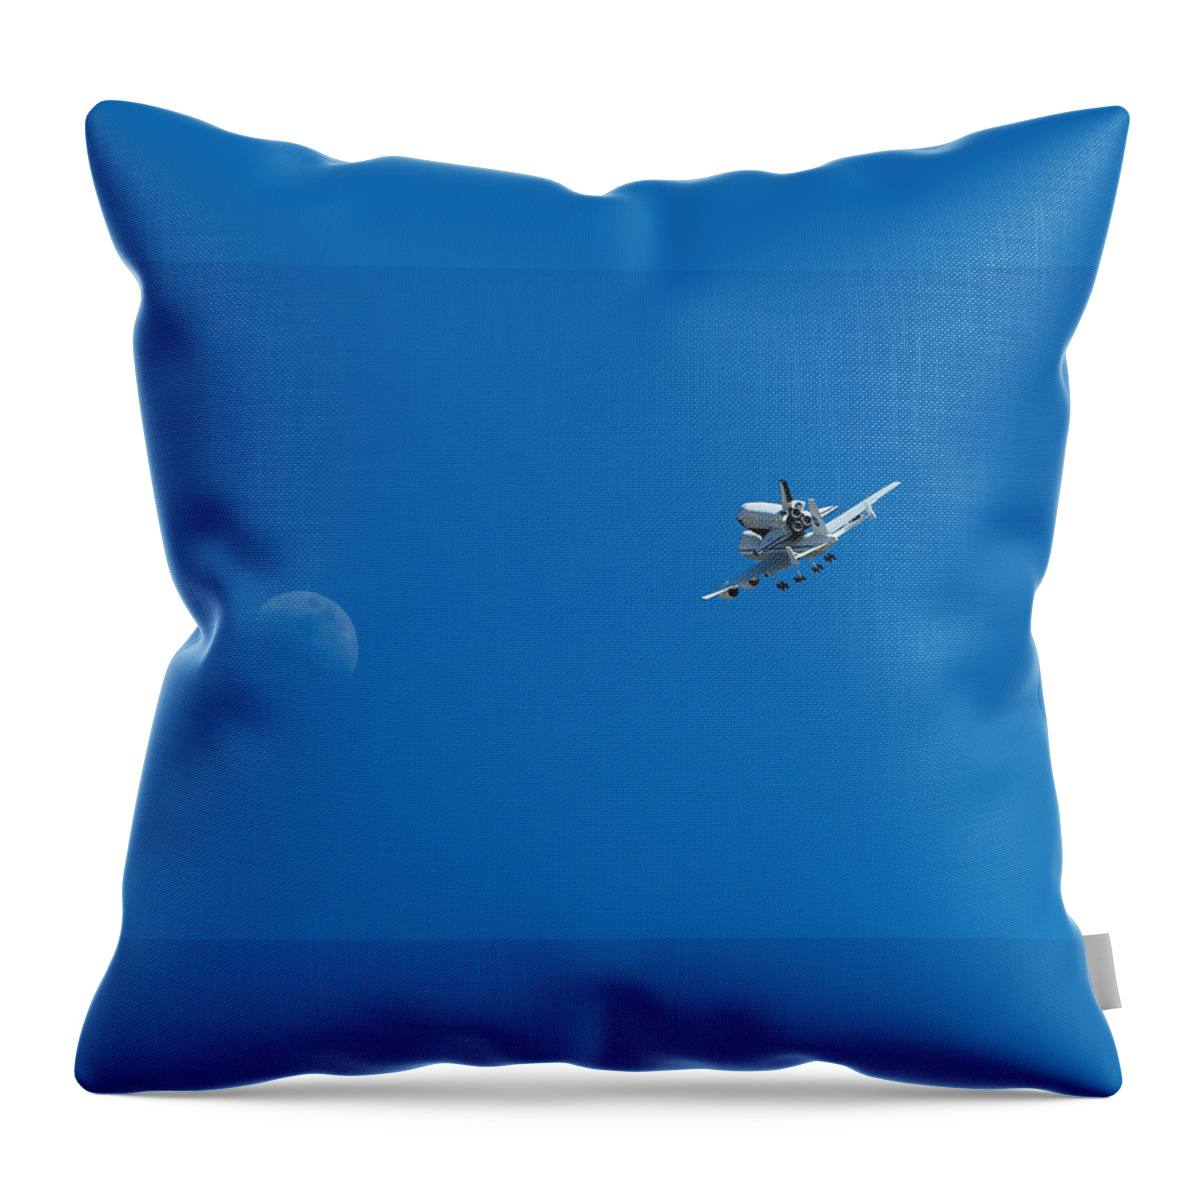 Shuttle Throw Pillow featuring the photograph Shuttle to the Moon by Richard J Cassato